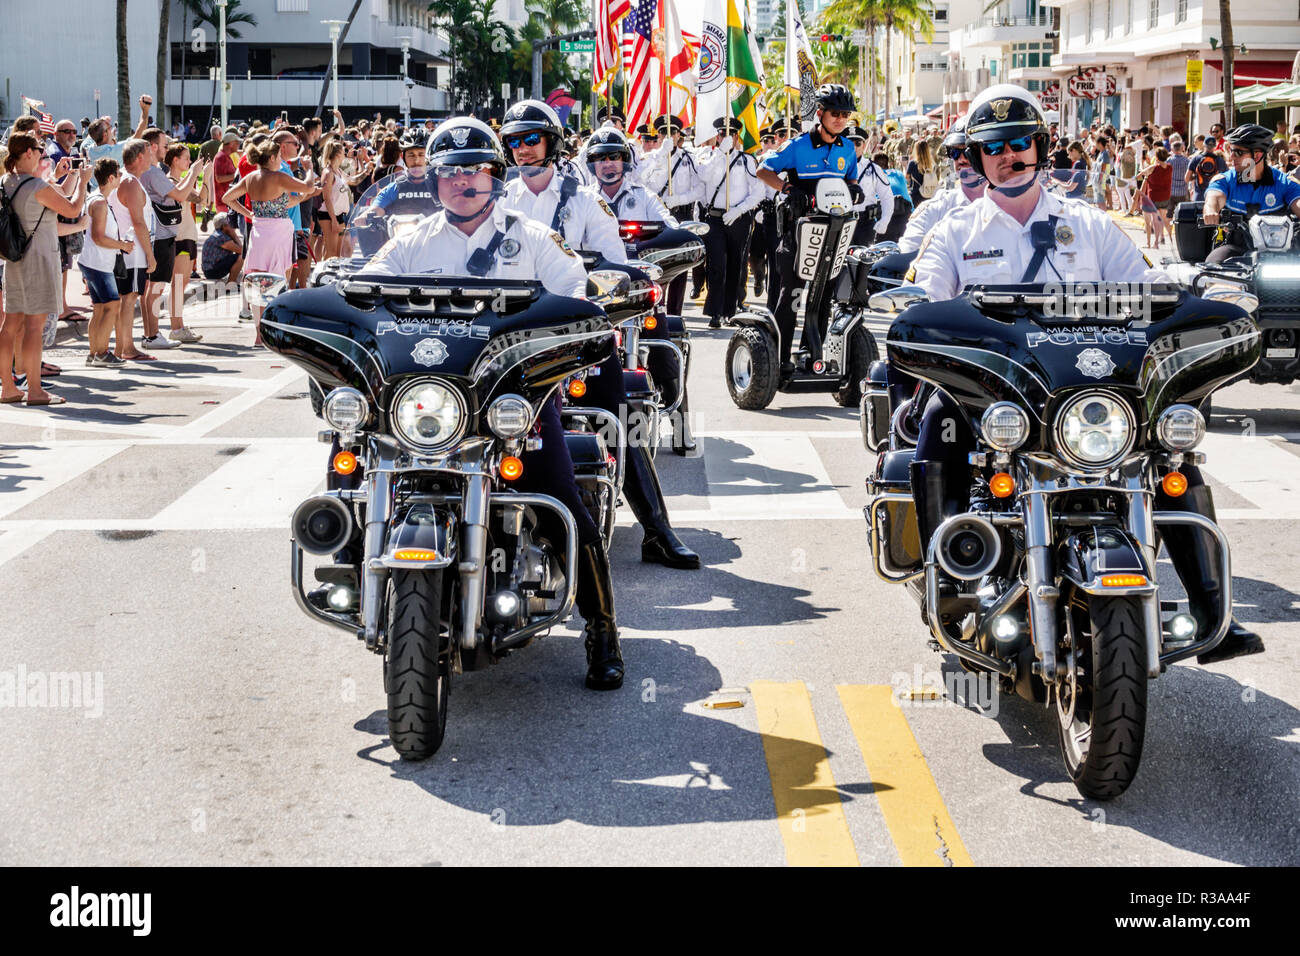 Florida, Miami Beach, Ocean Drive, Veterans Day Parade Aktivitäten,  Polizei, Motorrad Brigade Motorräder Formation Patrouille, Sightseeing vis  Stockfotografie - Alamy